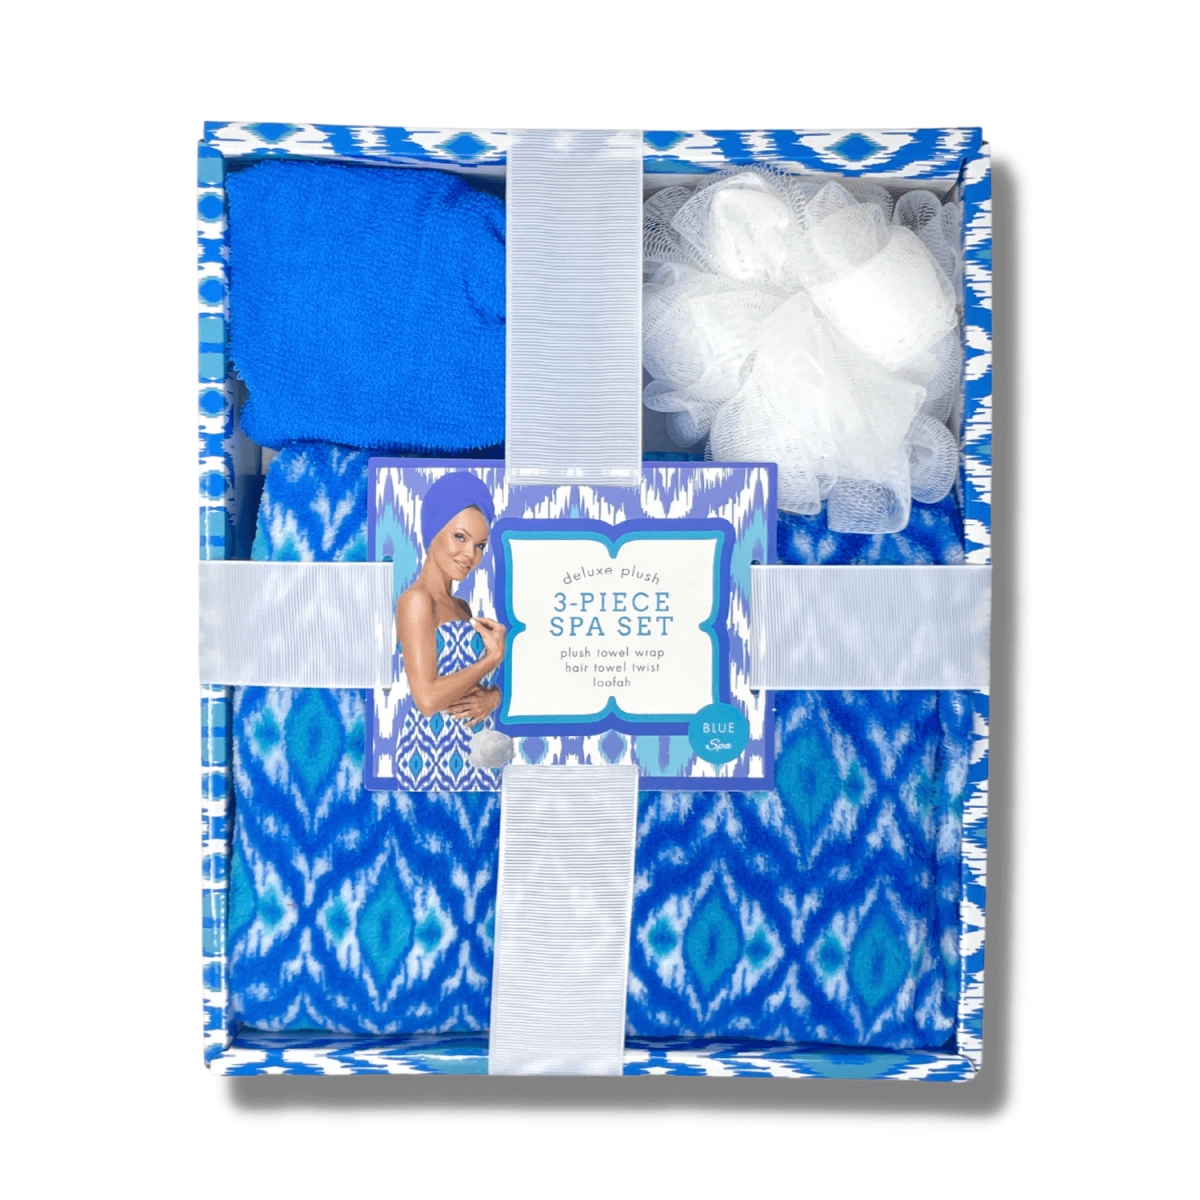 Picture of JupiterGear Home JG-SPASET1-BLU Deluxe Plush 3-Piece Bathroom Gift Box Spa Set (JG-SPASET1-BLU) Blue